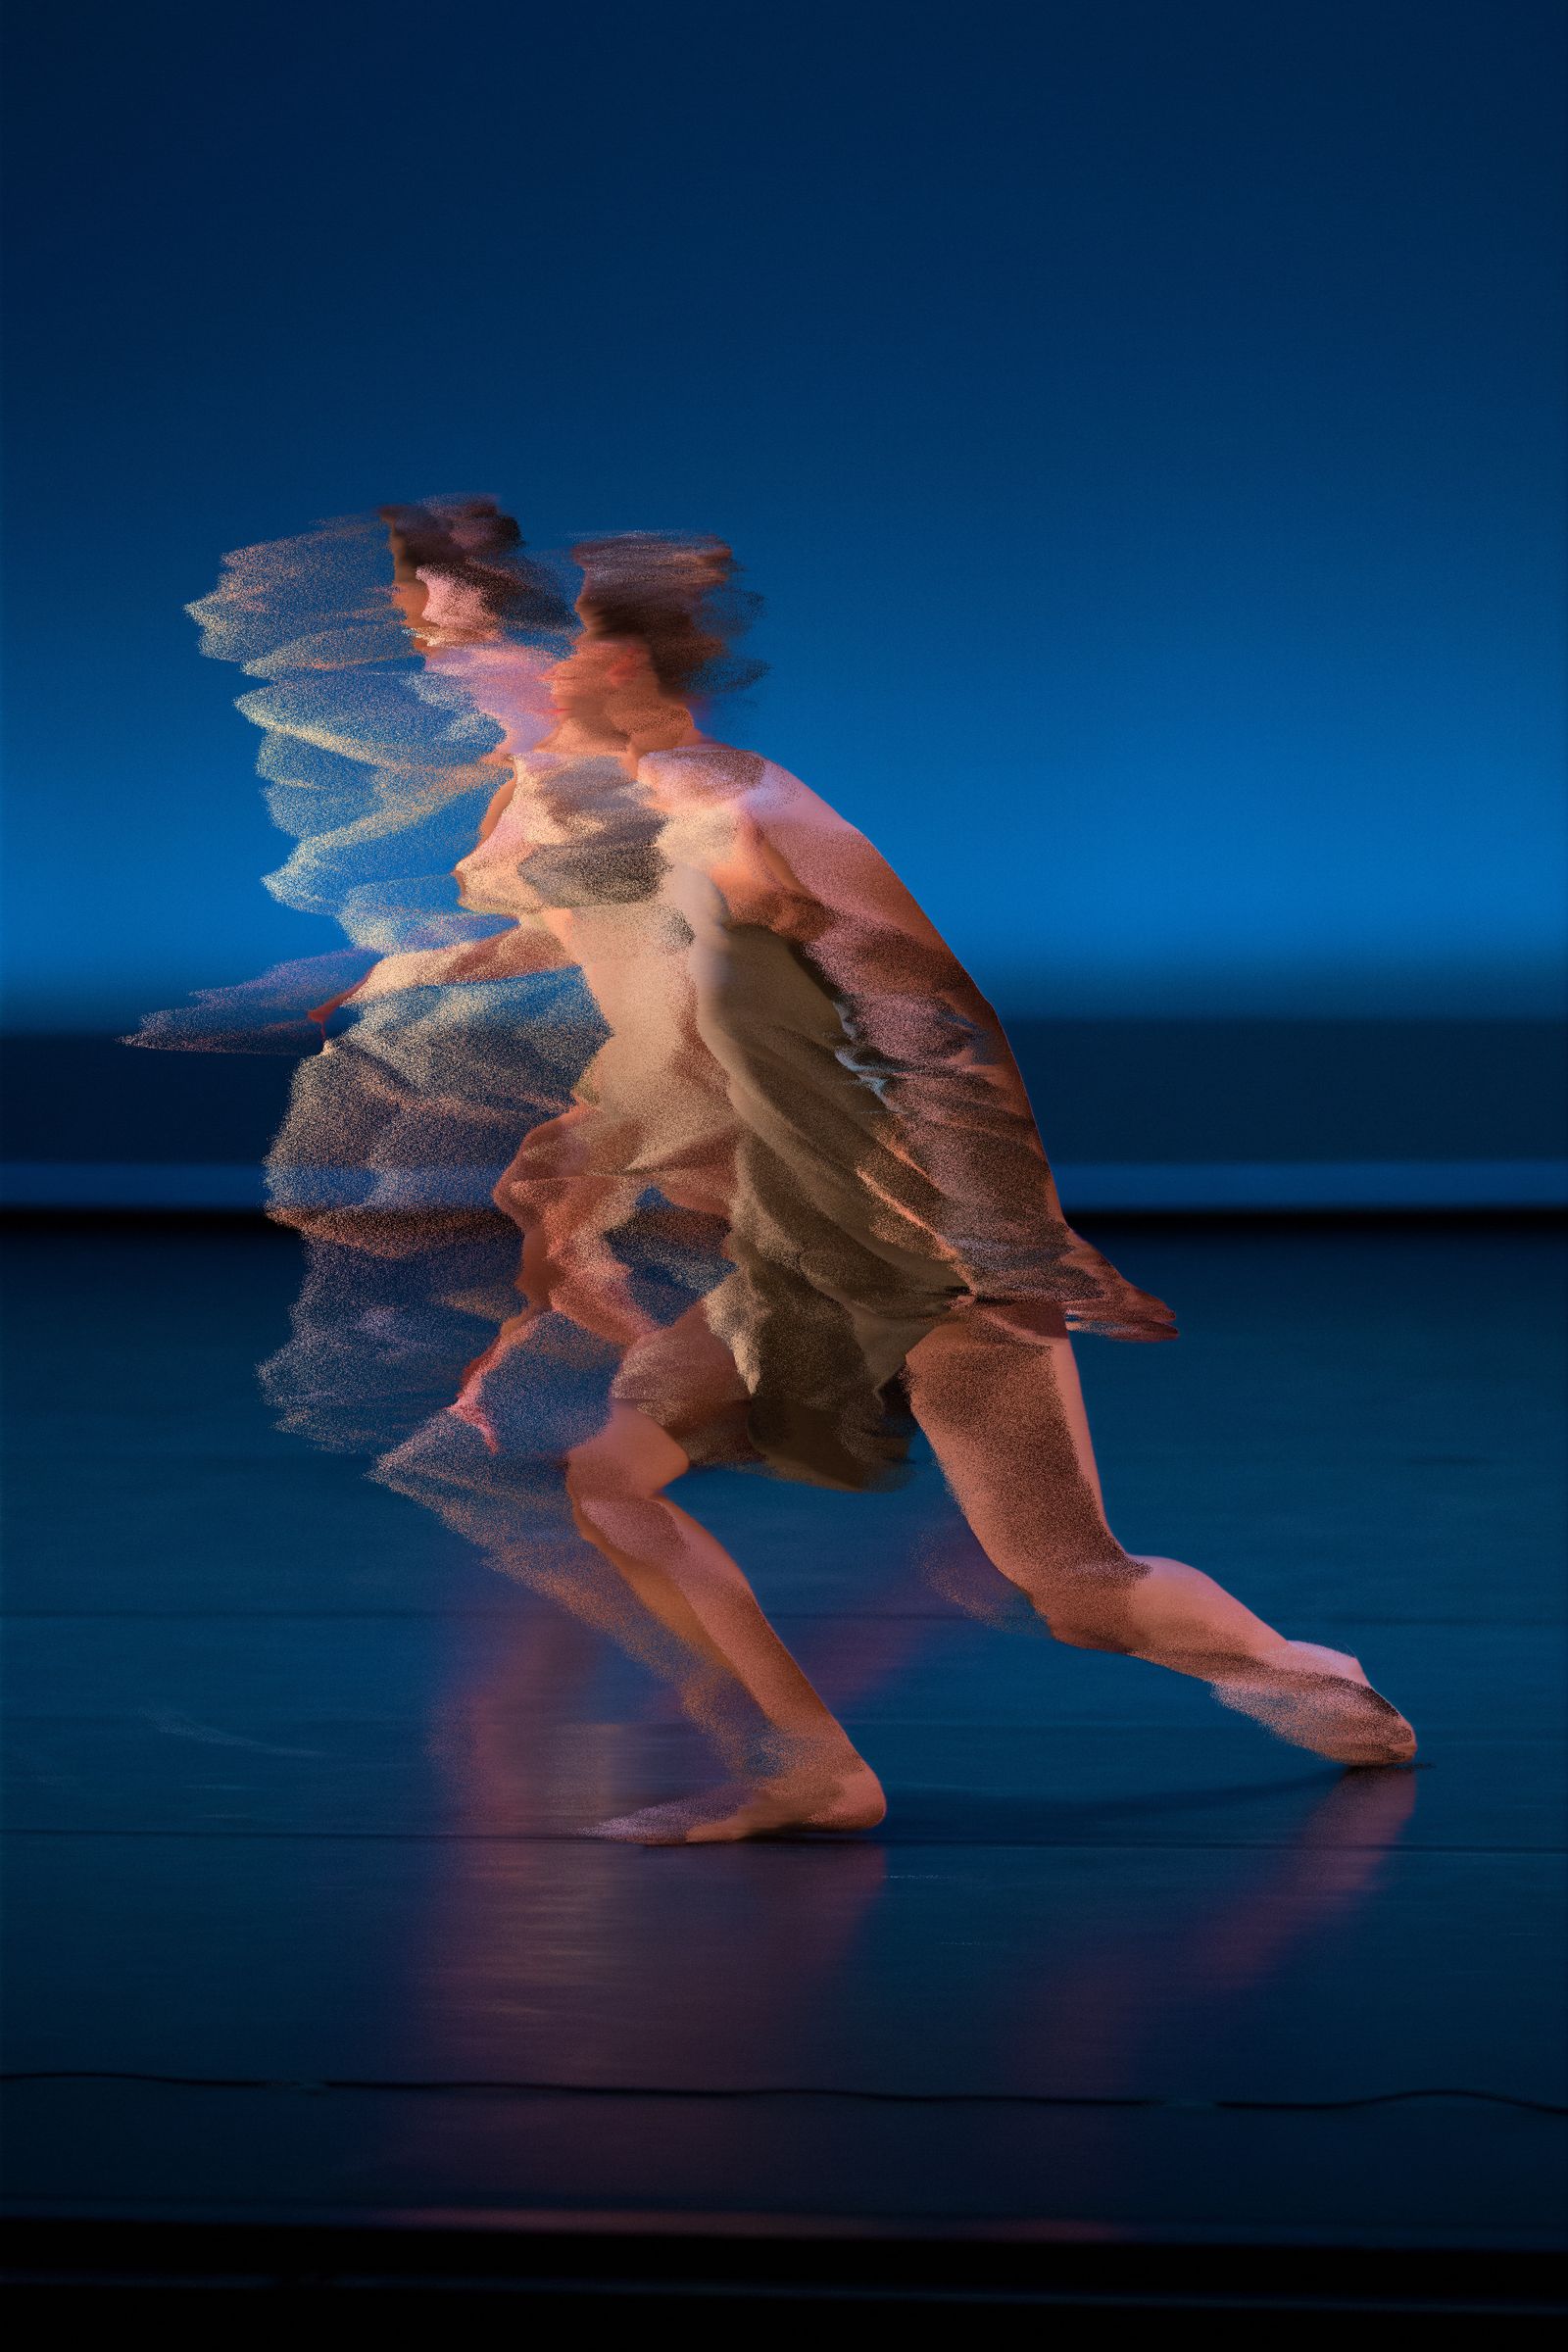 Dancer distorted with pixel sorting